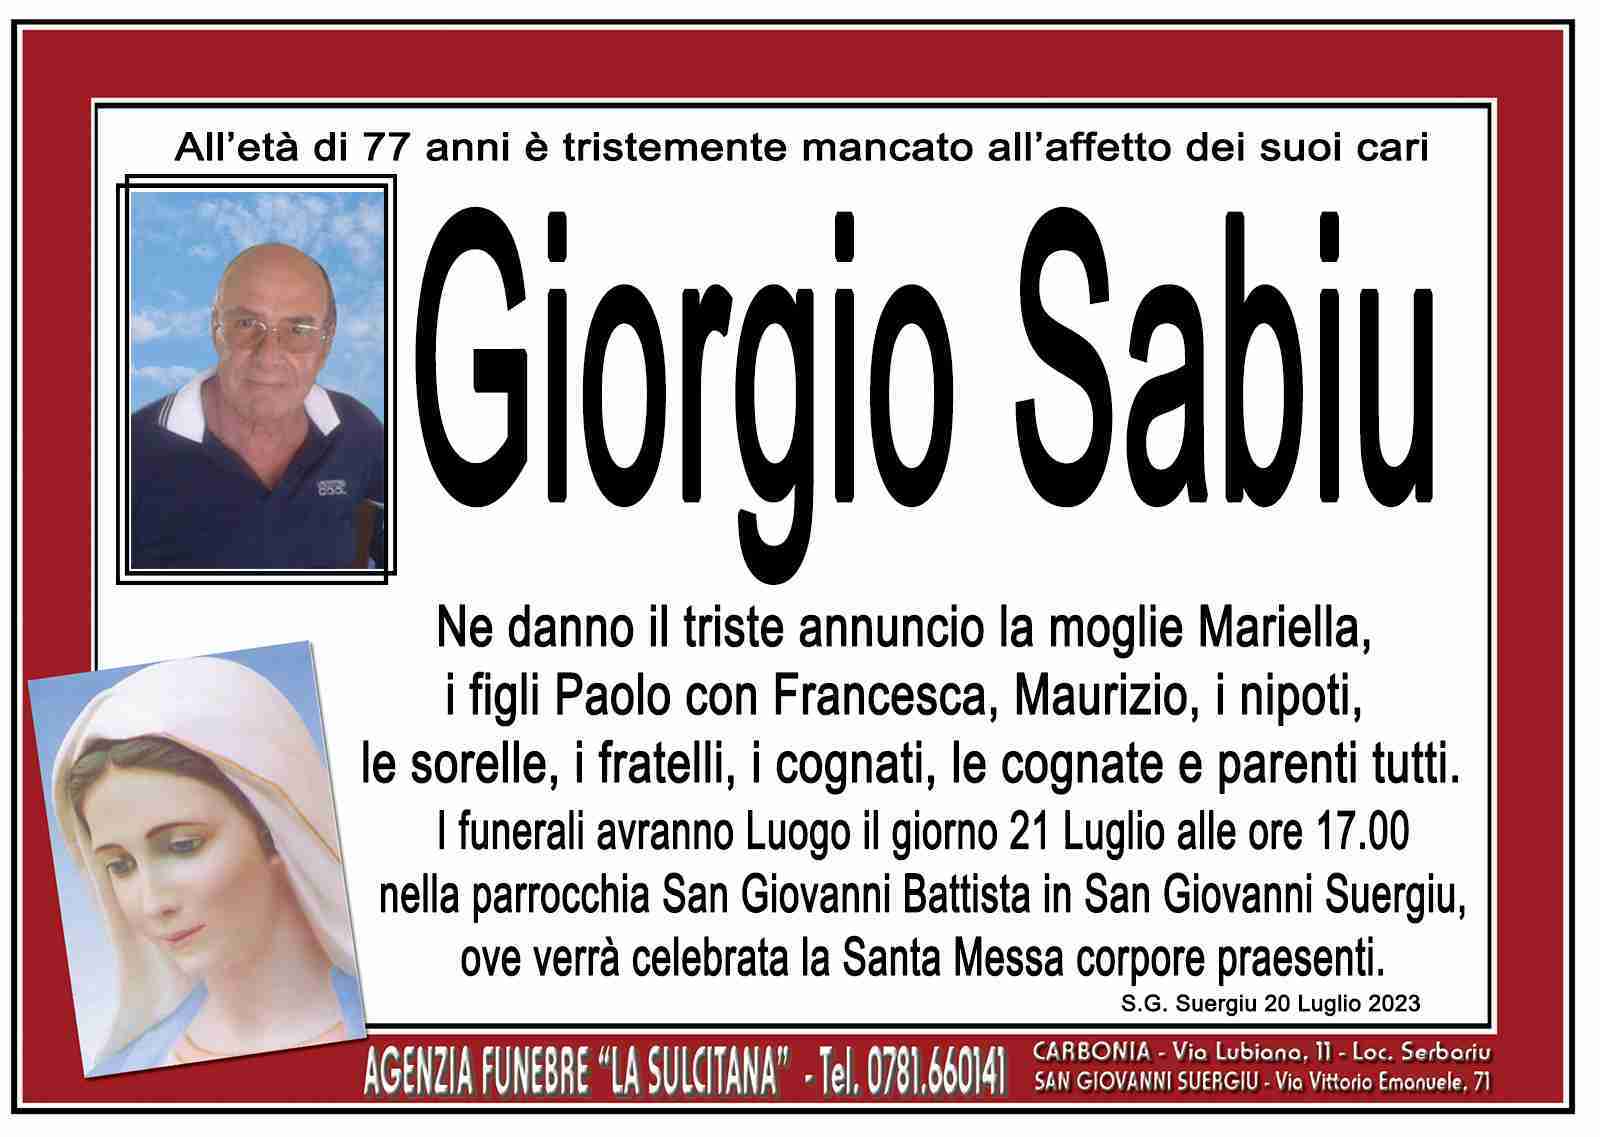 Giorgio Sabiu